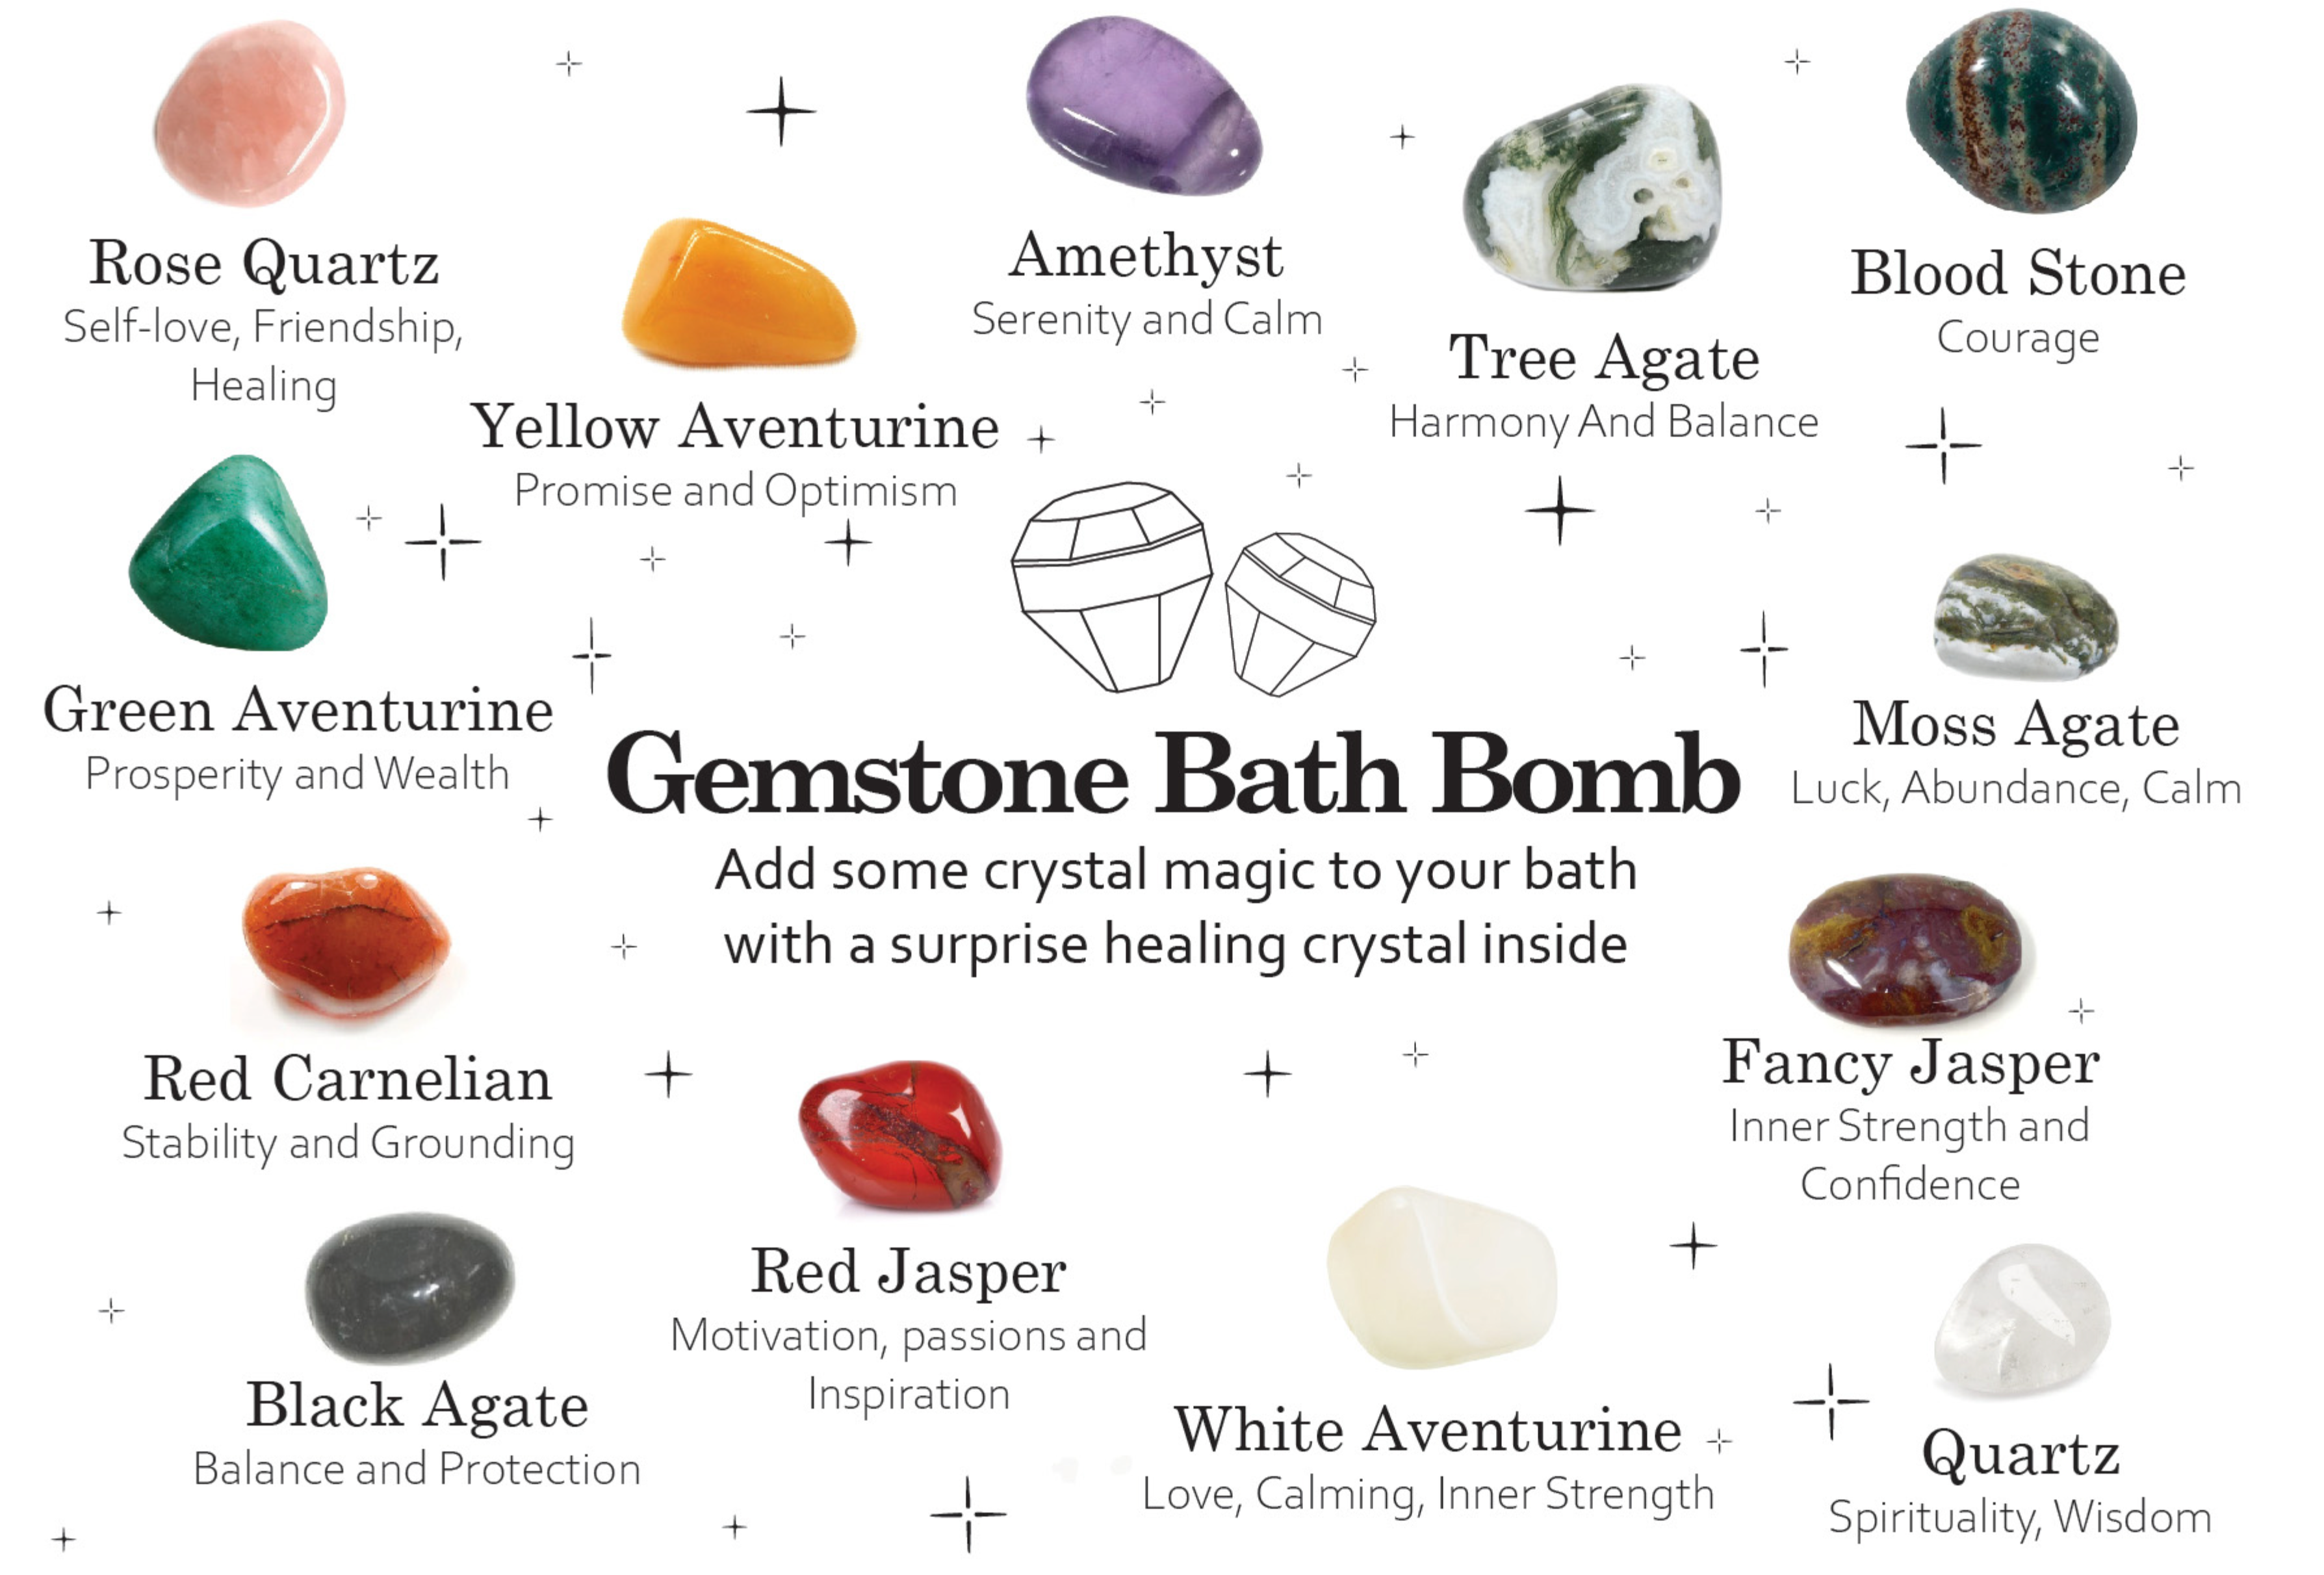 Gemstone Bath Bomb - Mistress Fragrance